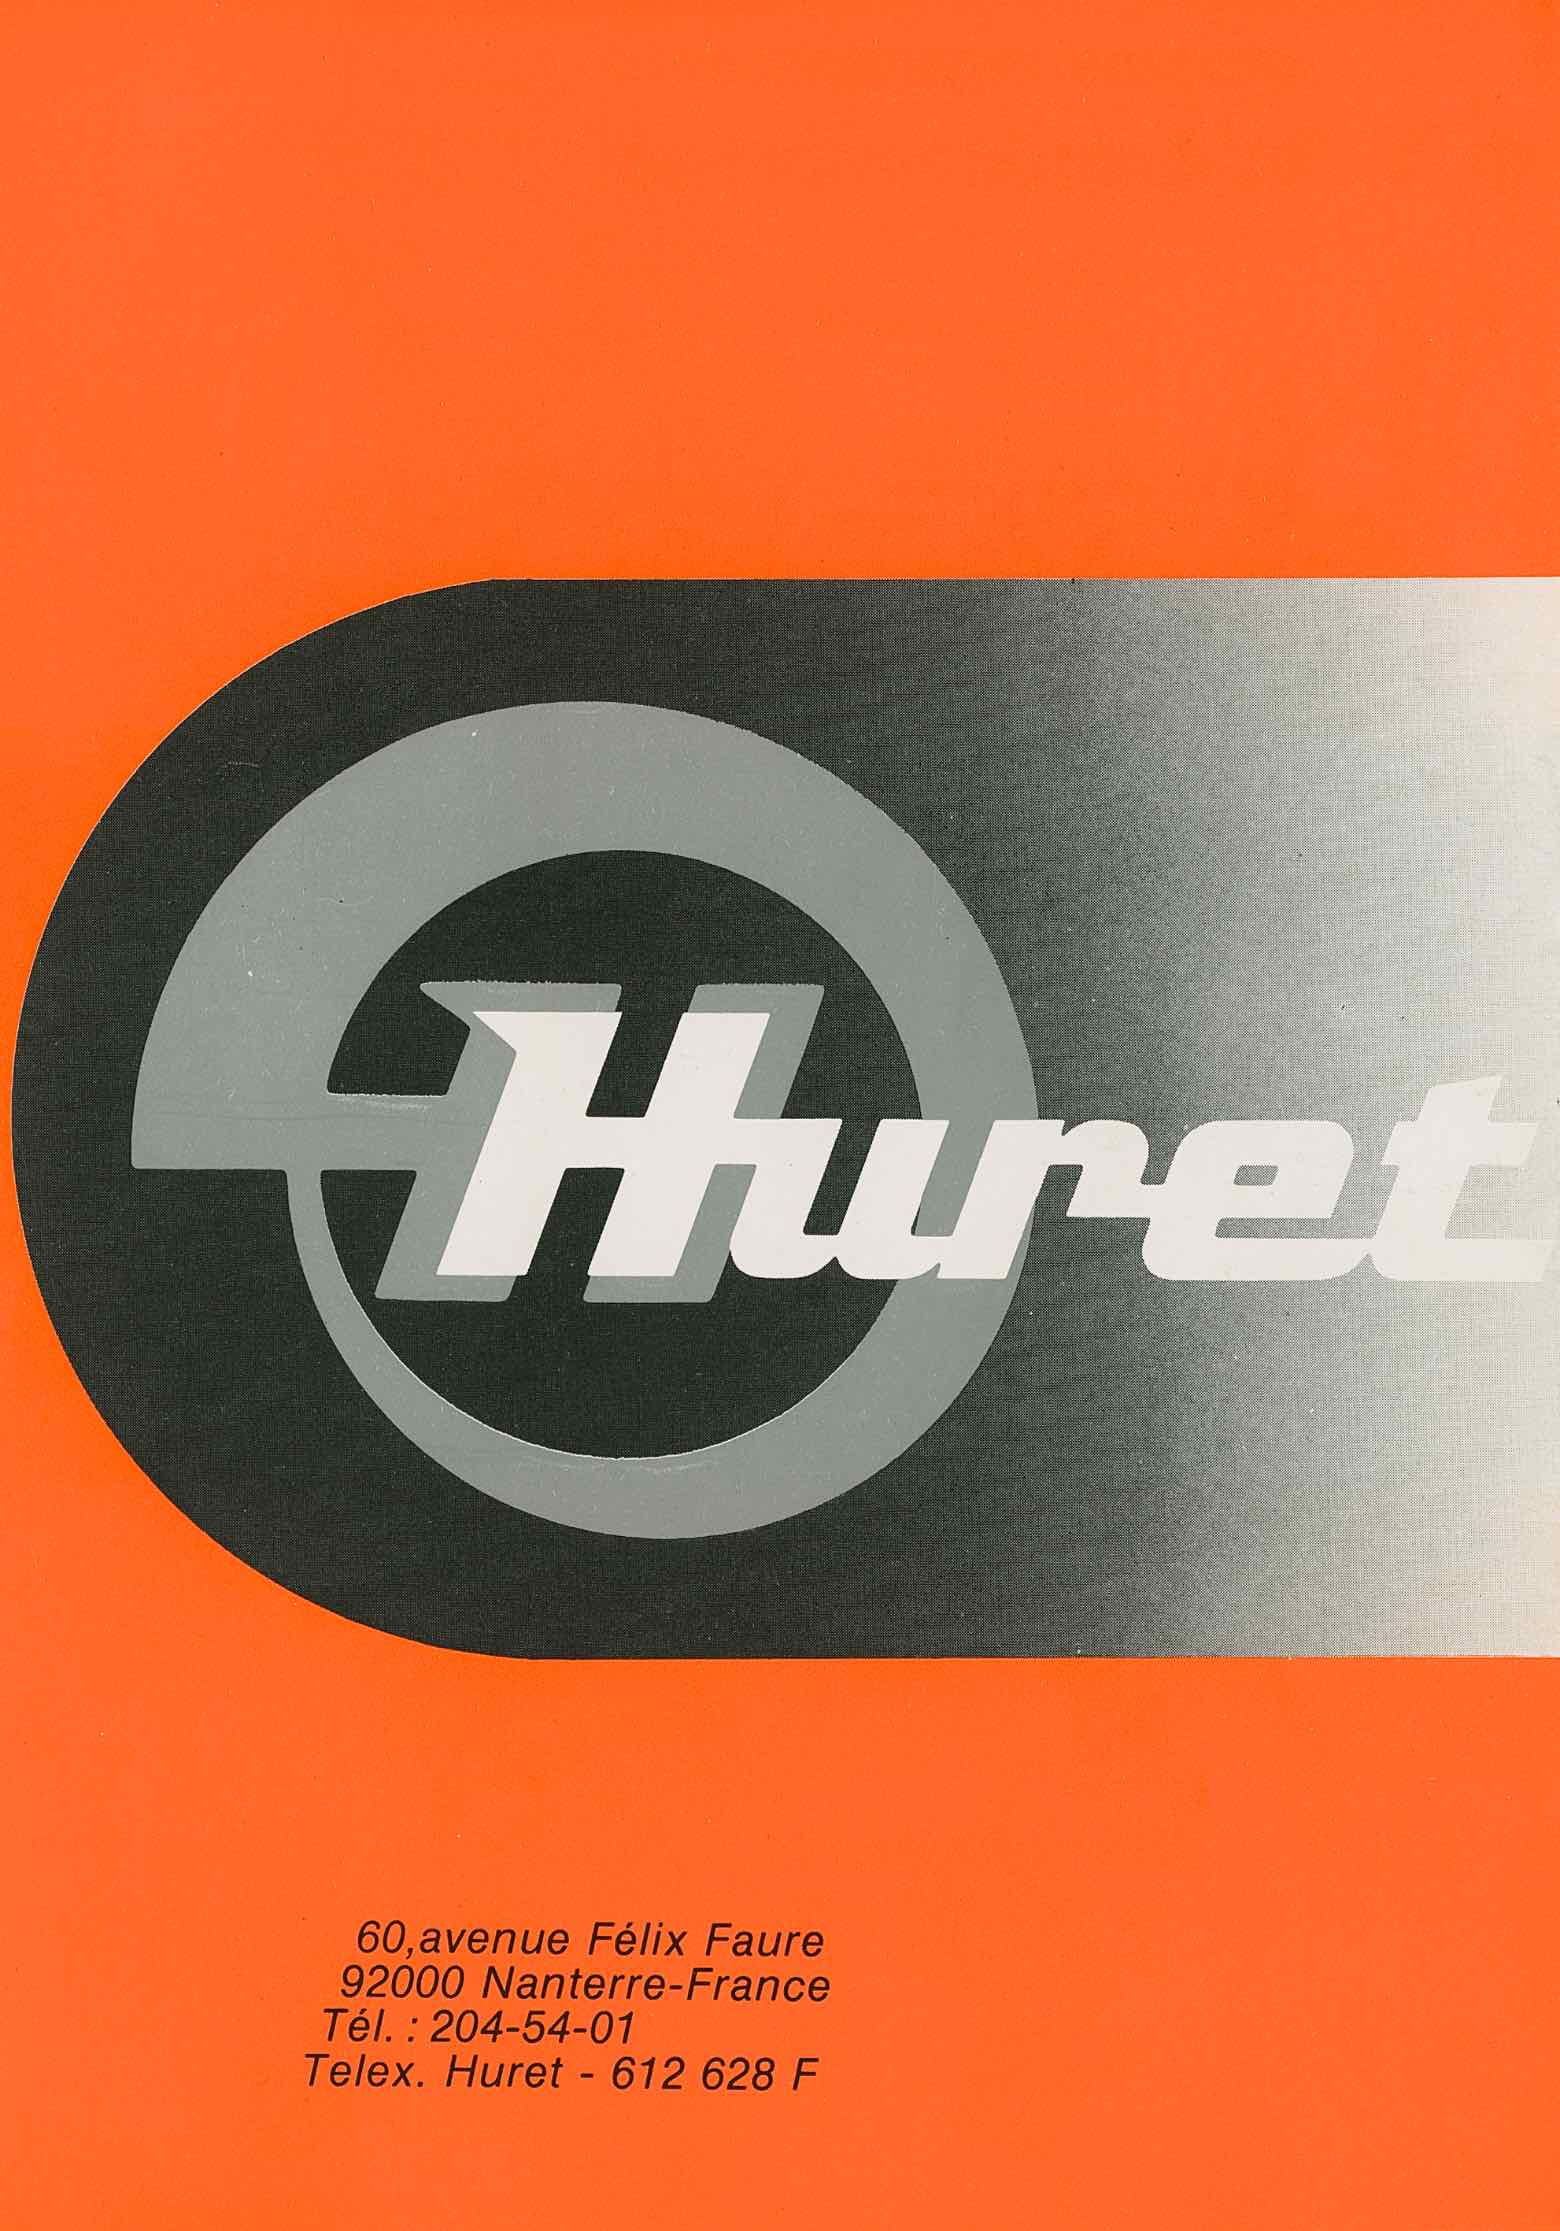 Huret - catalogue 1979? scan 1 main image